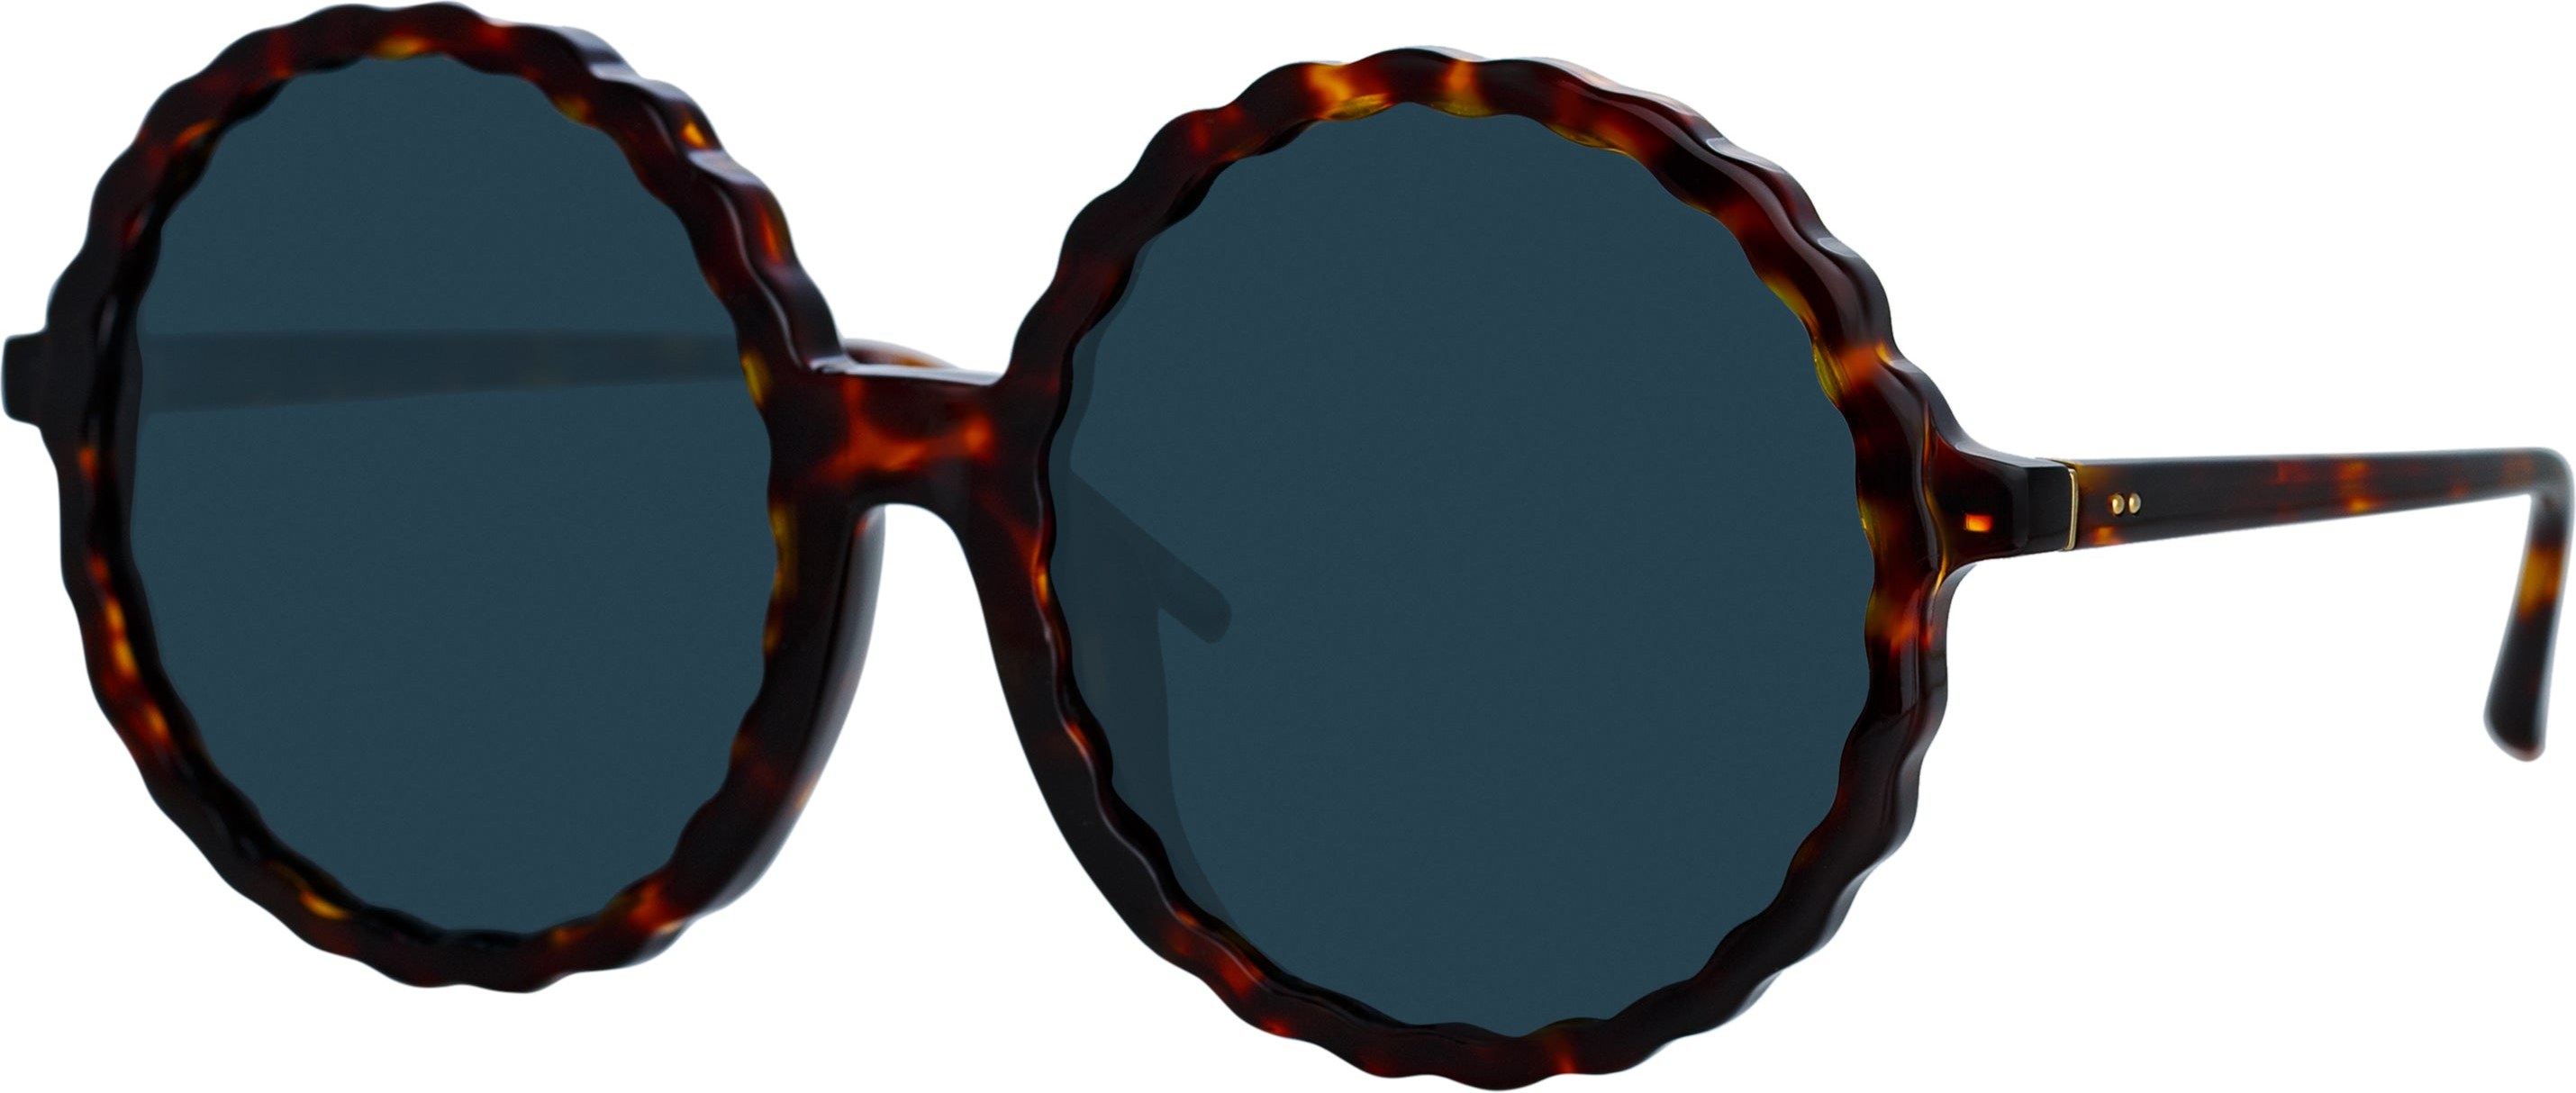 Color_LFL1354C2SUN - Nova Round Sunglasses in Tortoiseshell